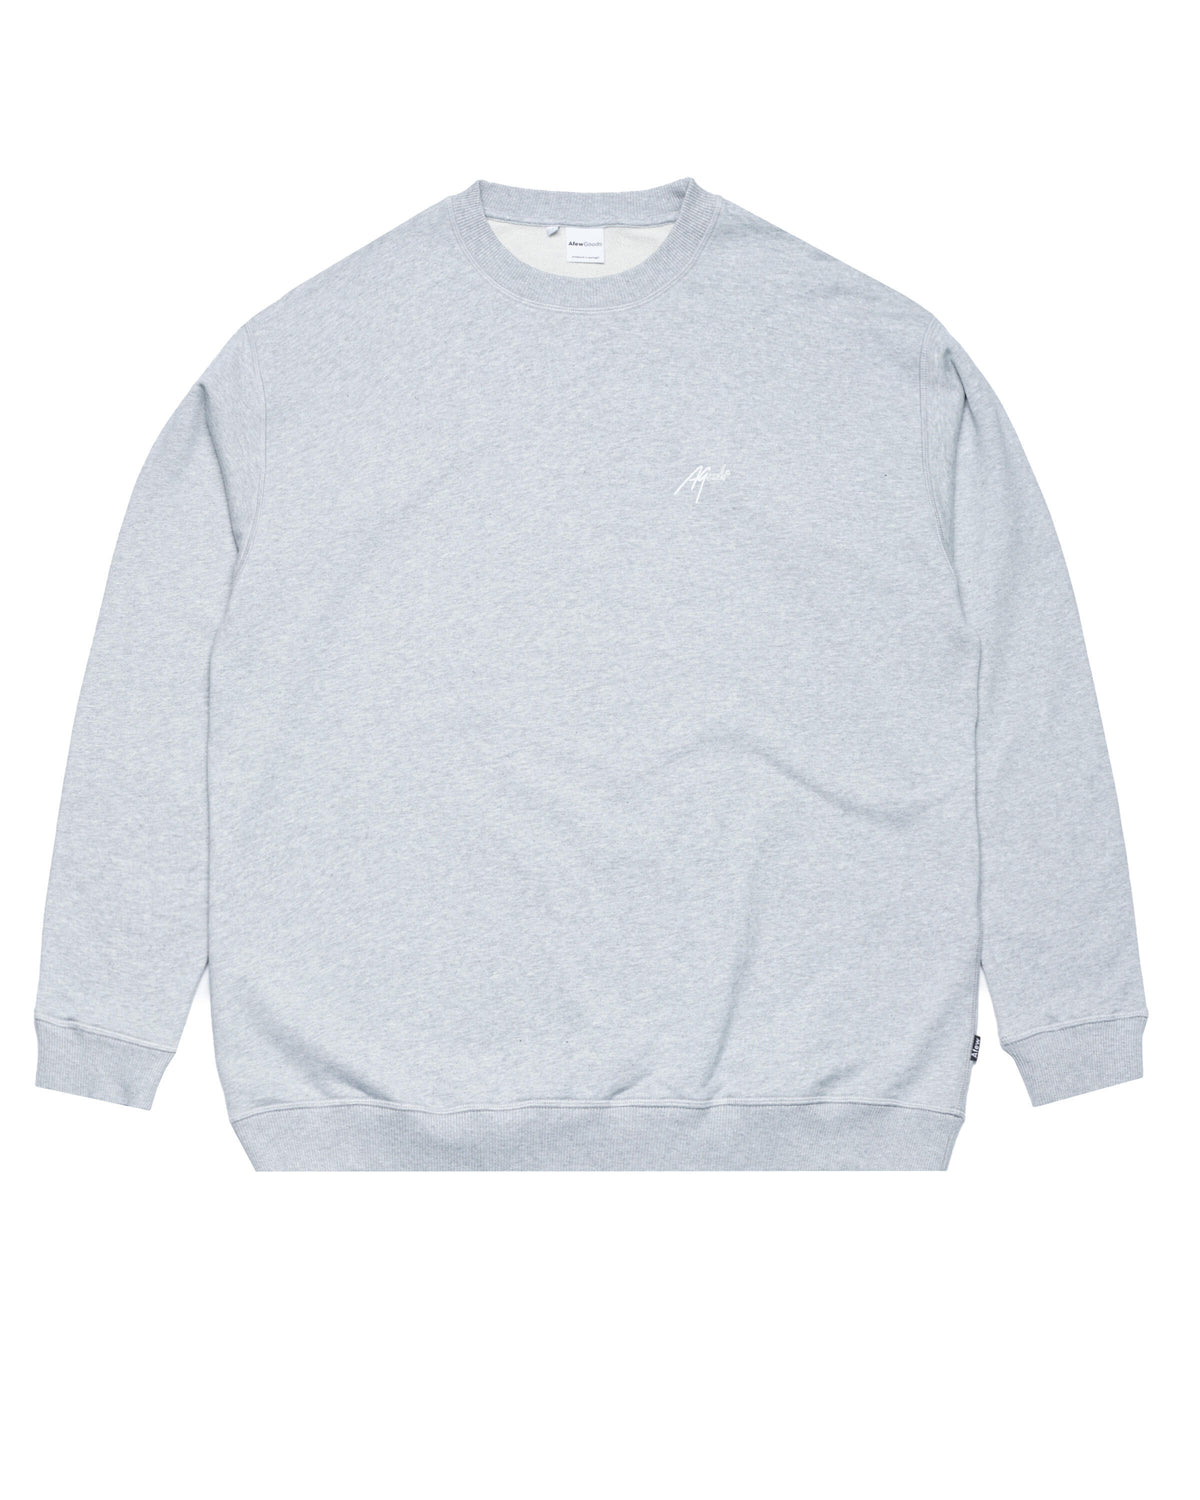 Afew Goods Logo Sweater (Grey)